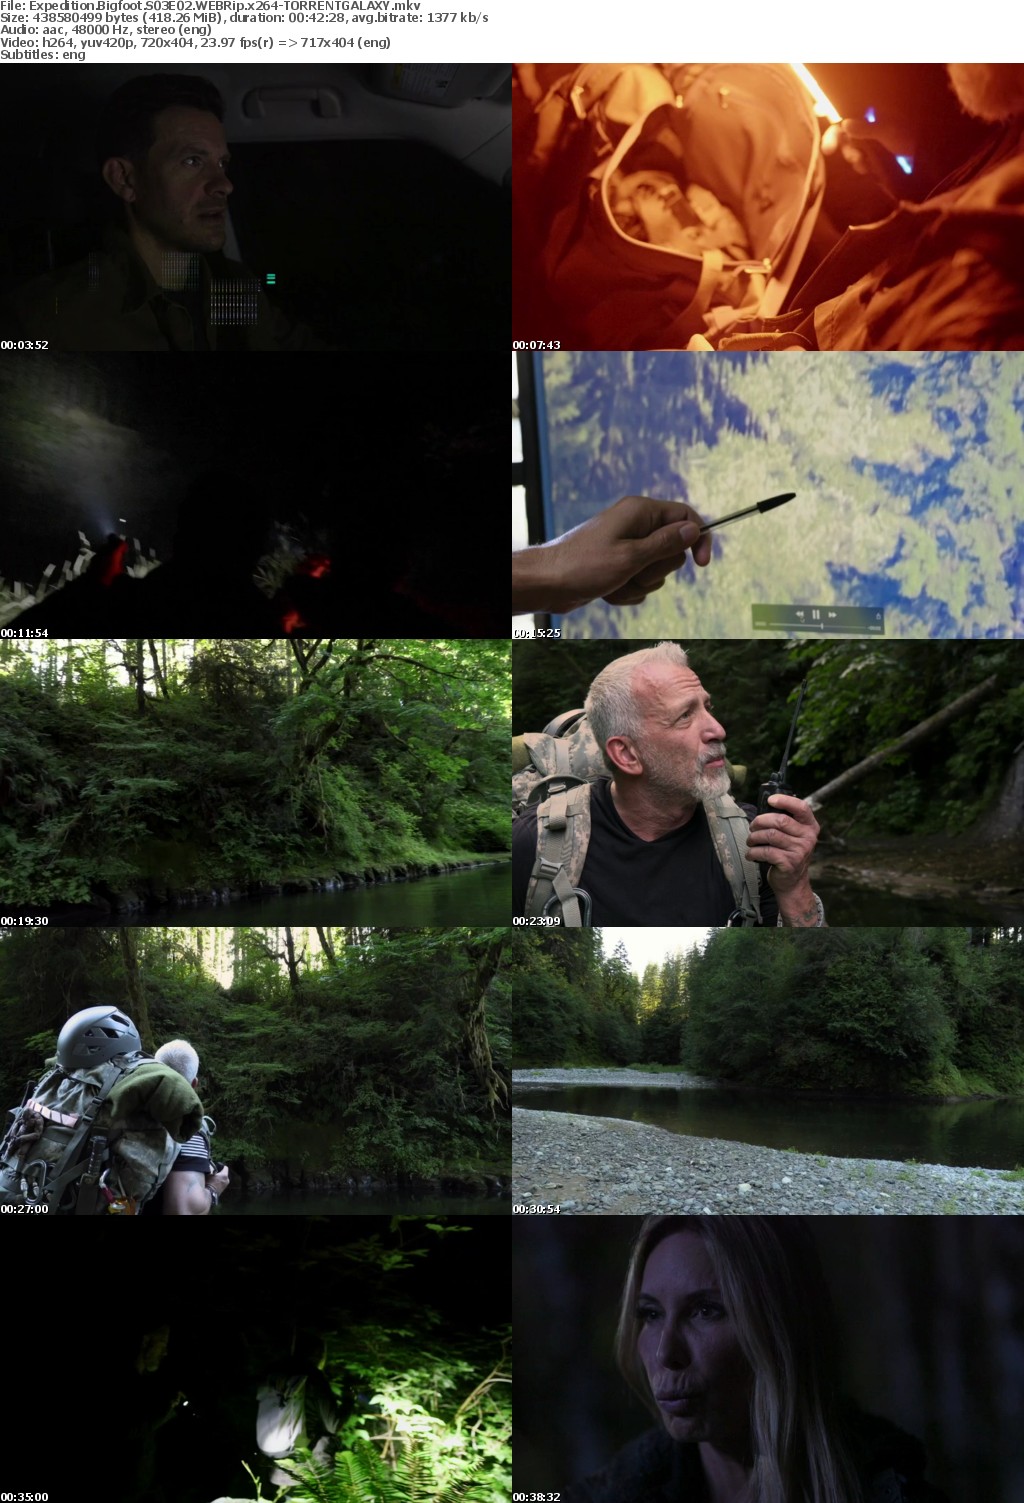 Expedition Bigfoot S03E02 WEBRip x264-GALAXY